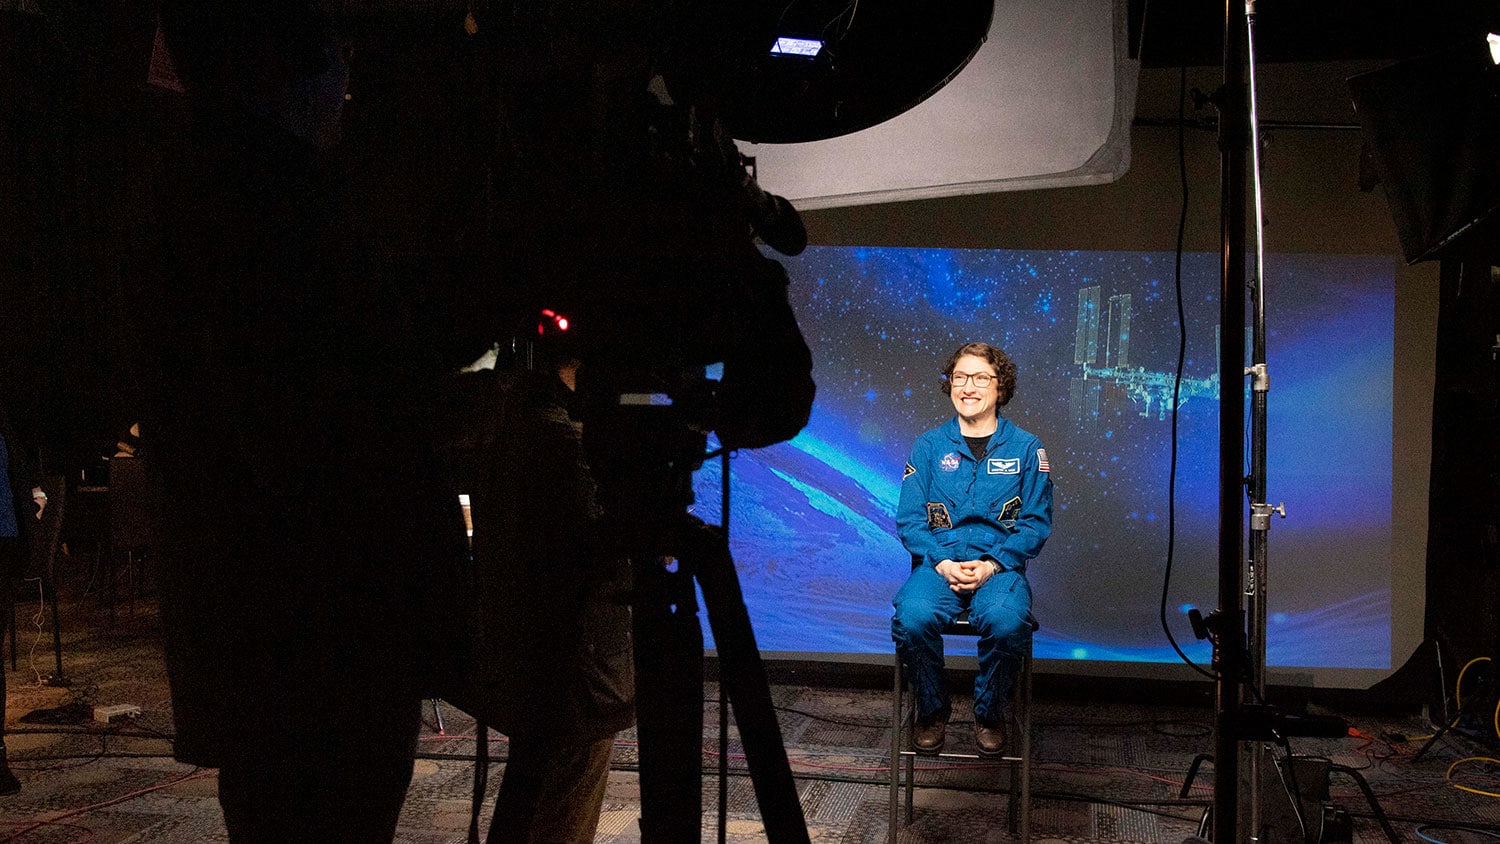 Astronaut Christina Koch gives a press conference